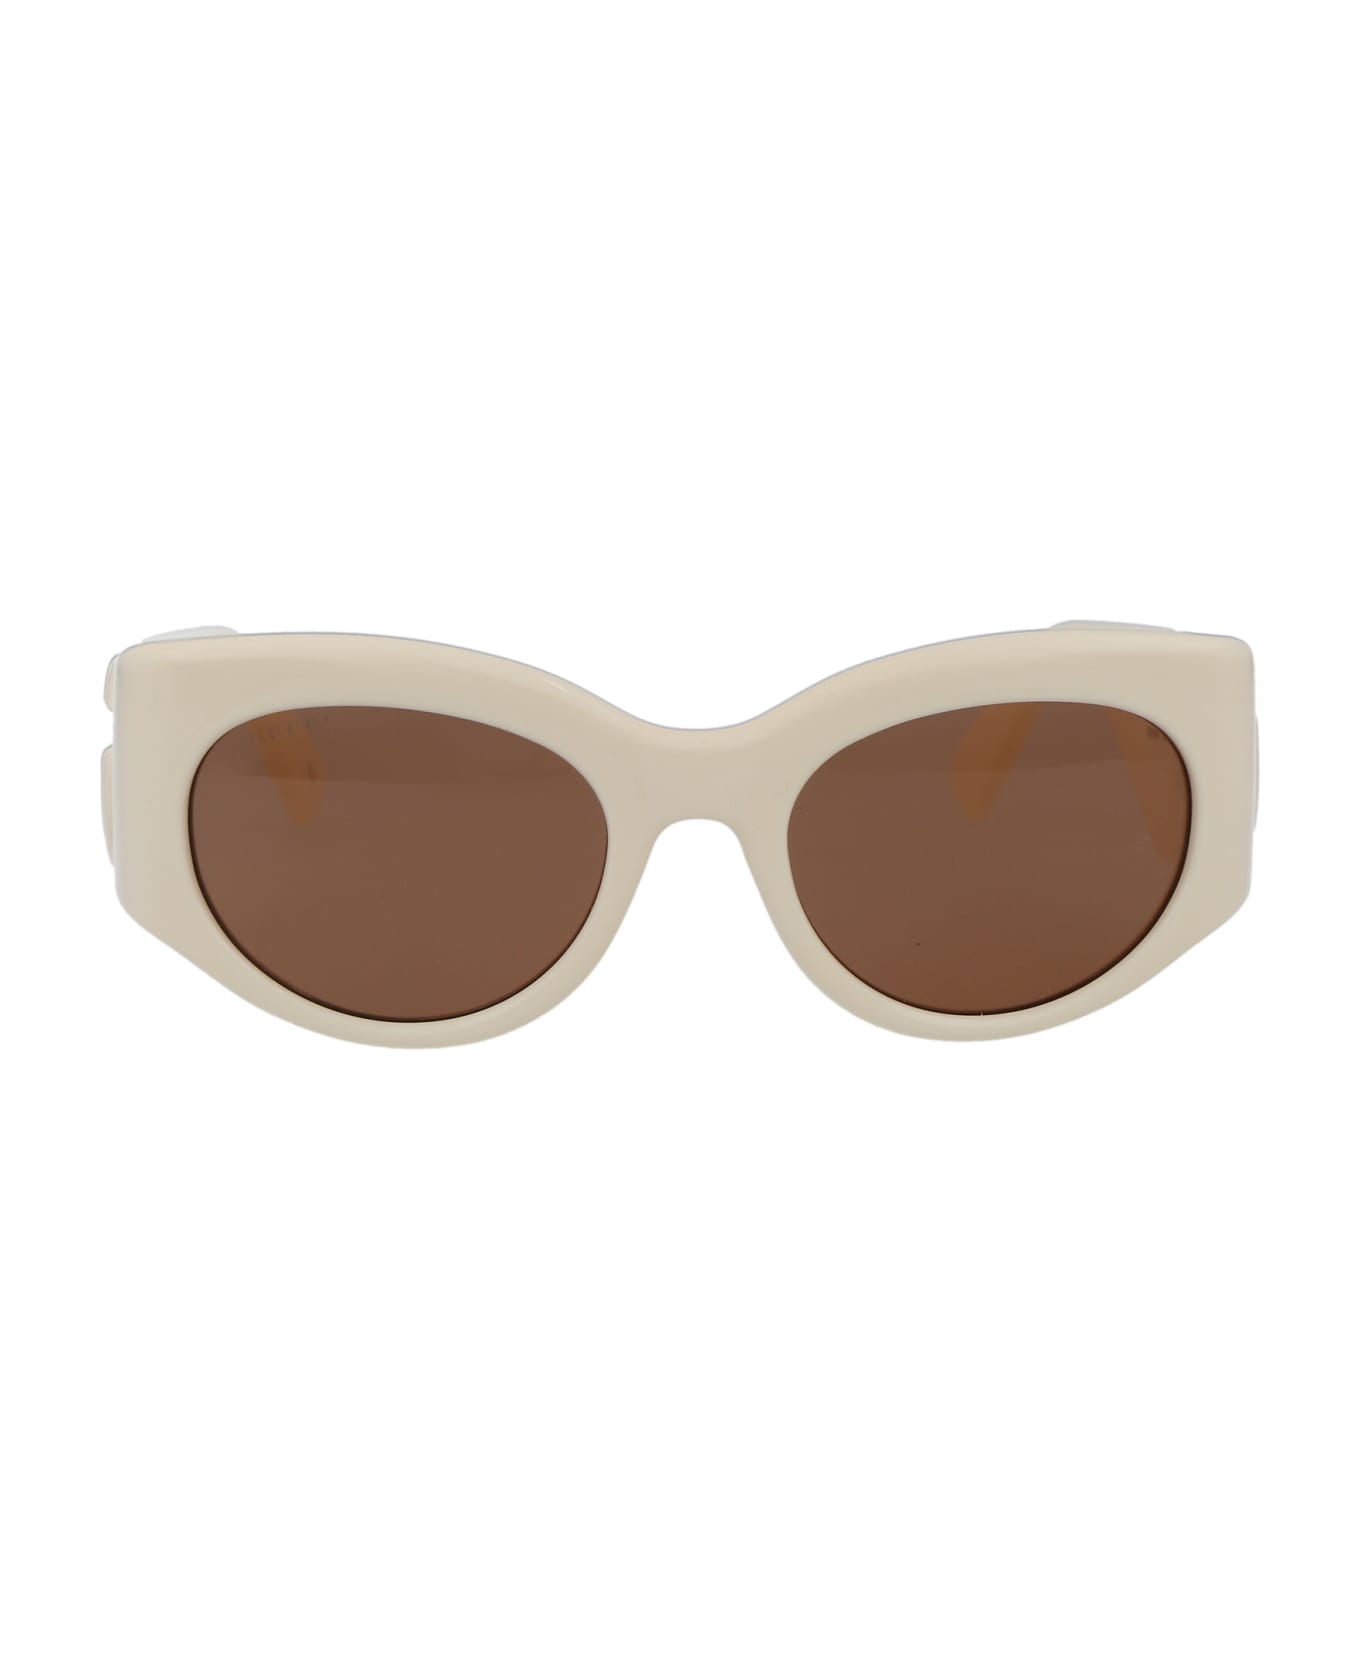 Gucci Eyewear Gg1544s Sunglasses - 004 IVORY IVORY BROWN